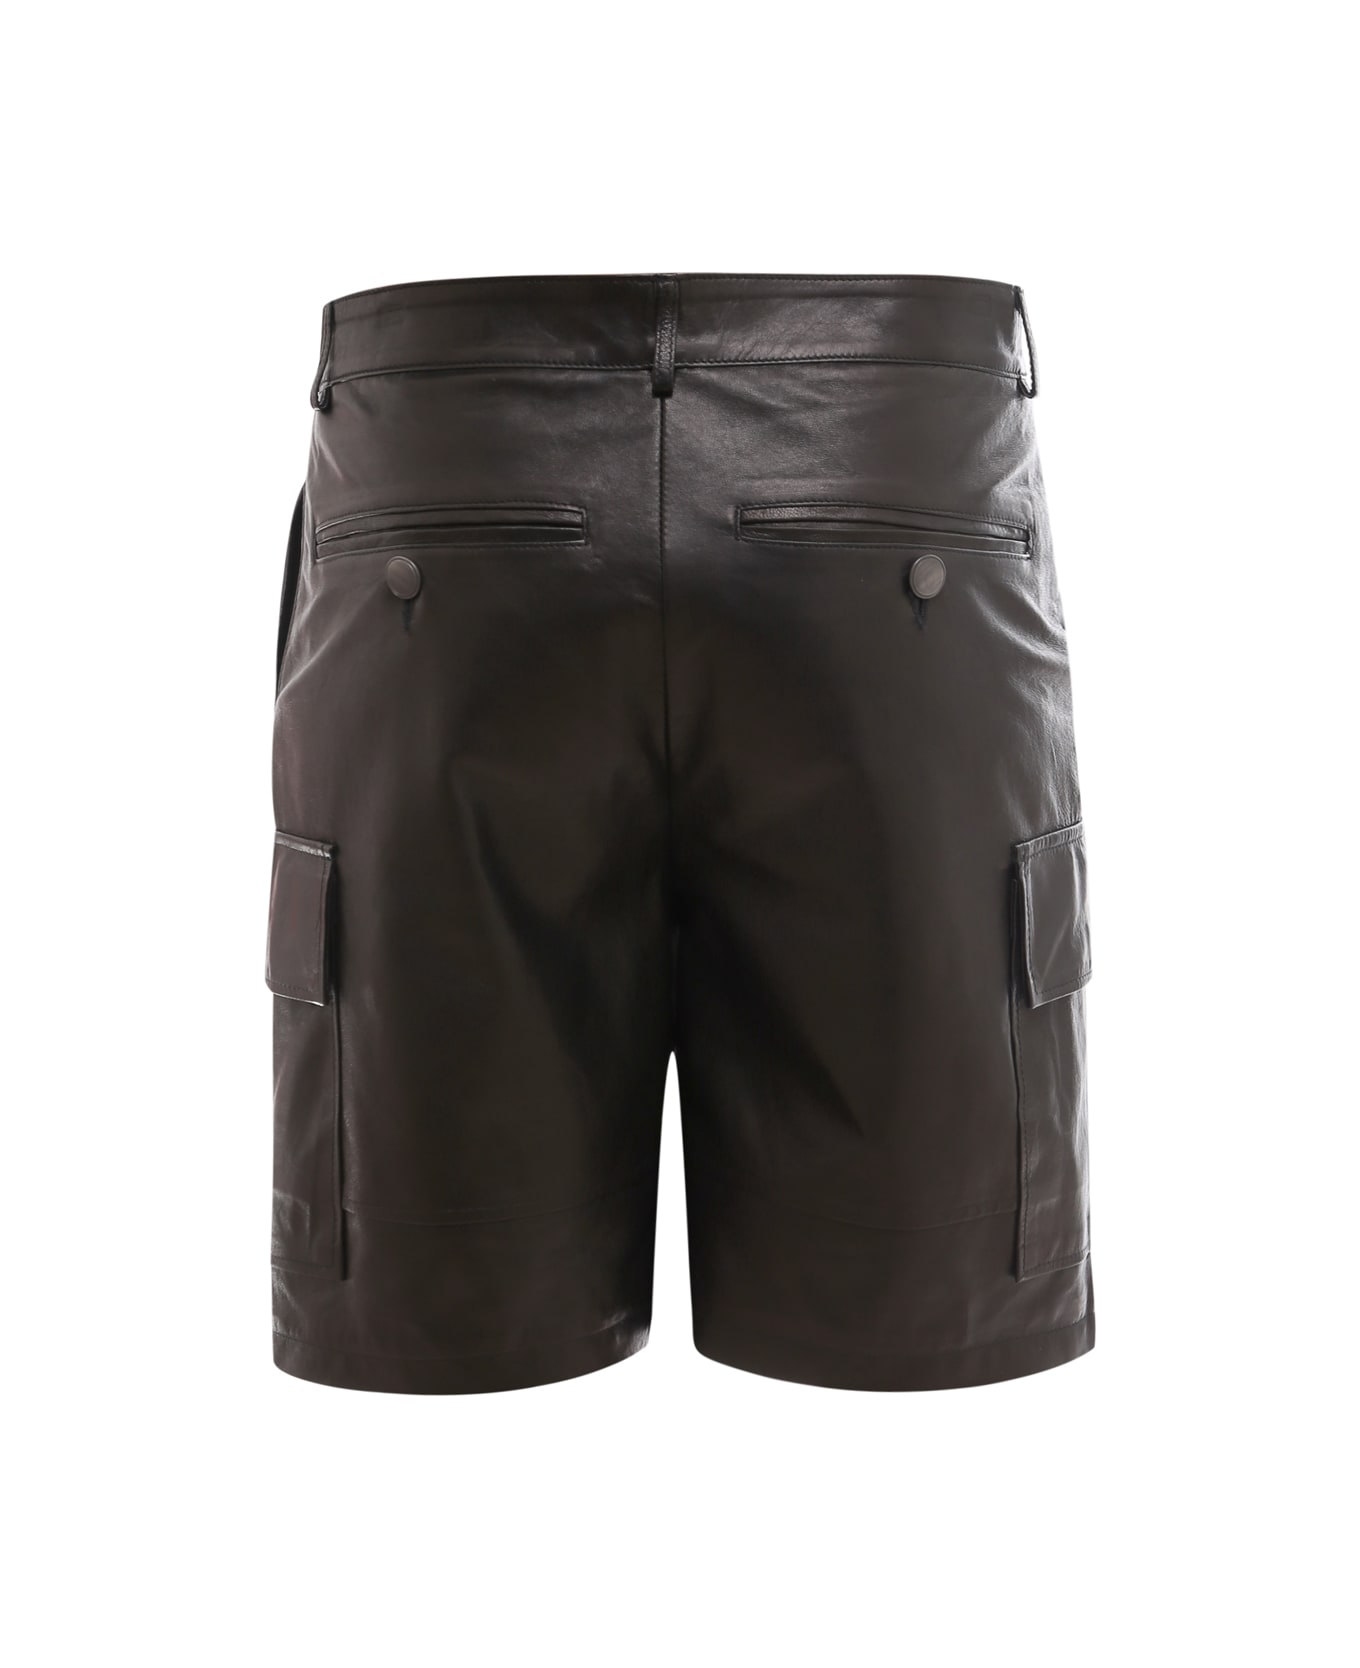 DFour Bermuda Shorts - Black